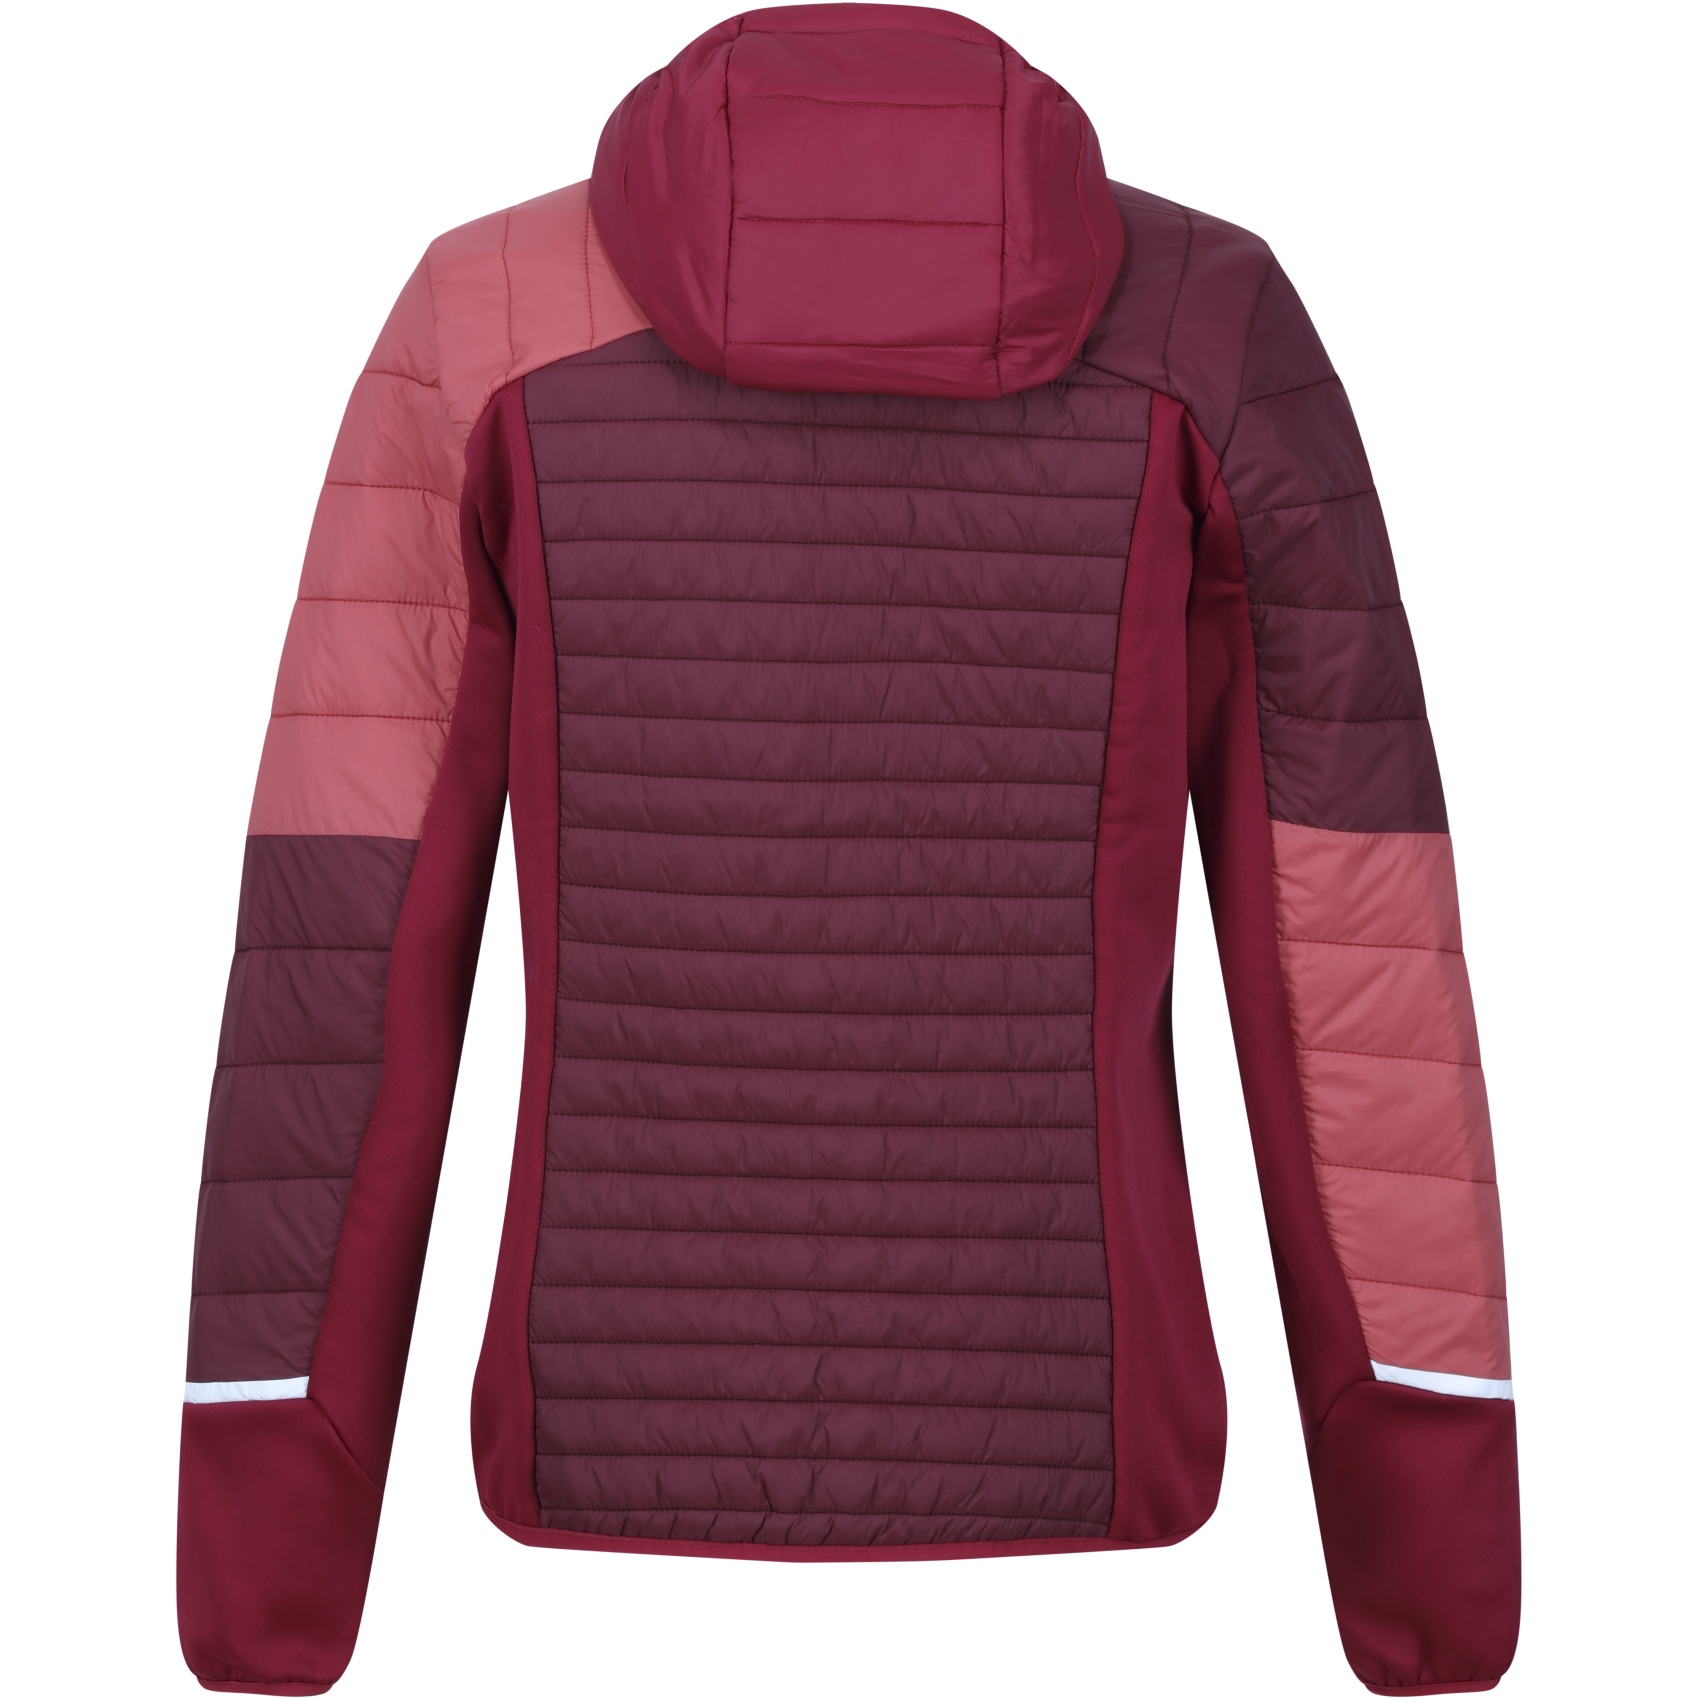 Regatta Trutton II Jacket Women - Burgundy/Rumba Red/Mineral Red XWI |  BIKE24 | Windbreakers